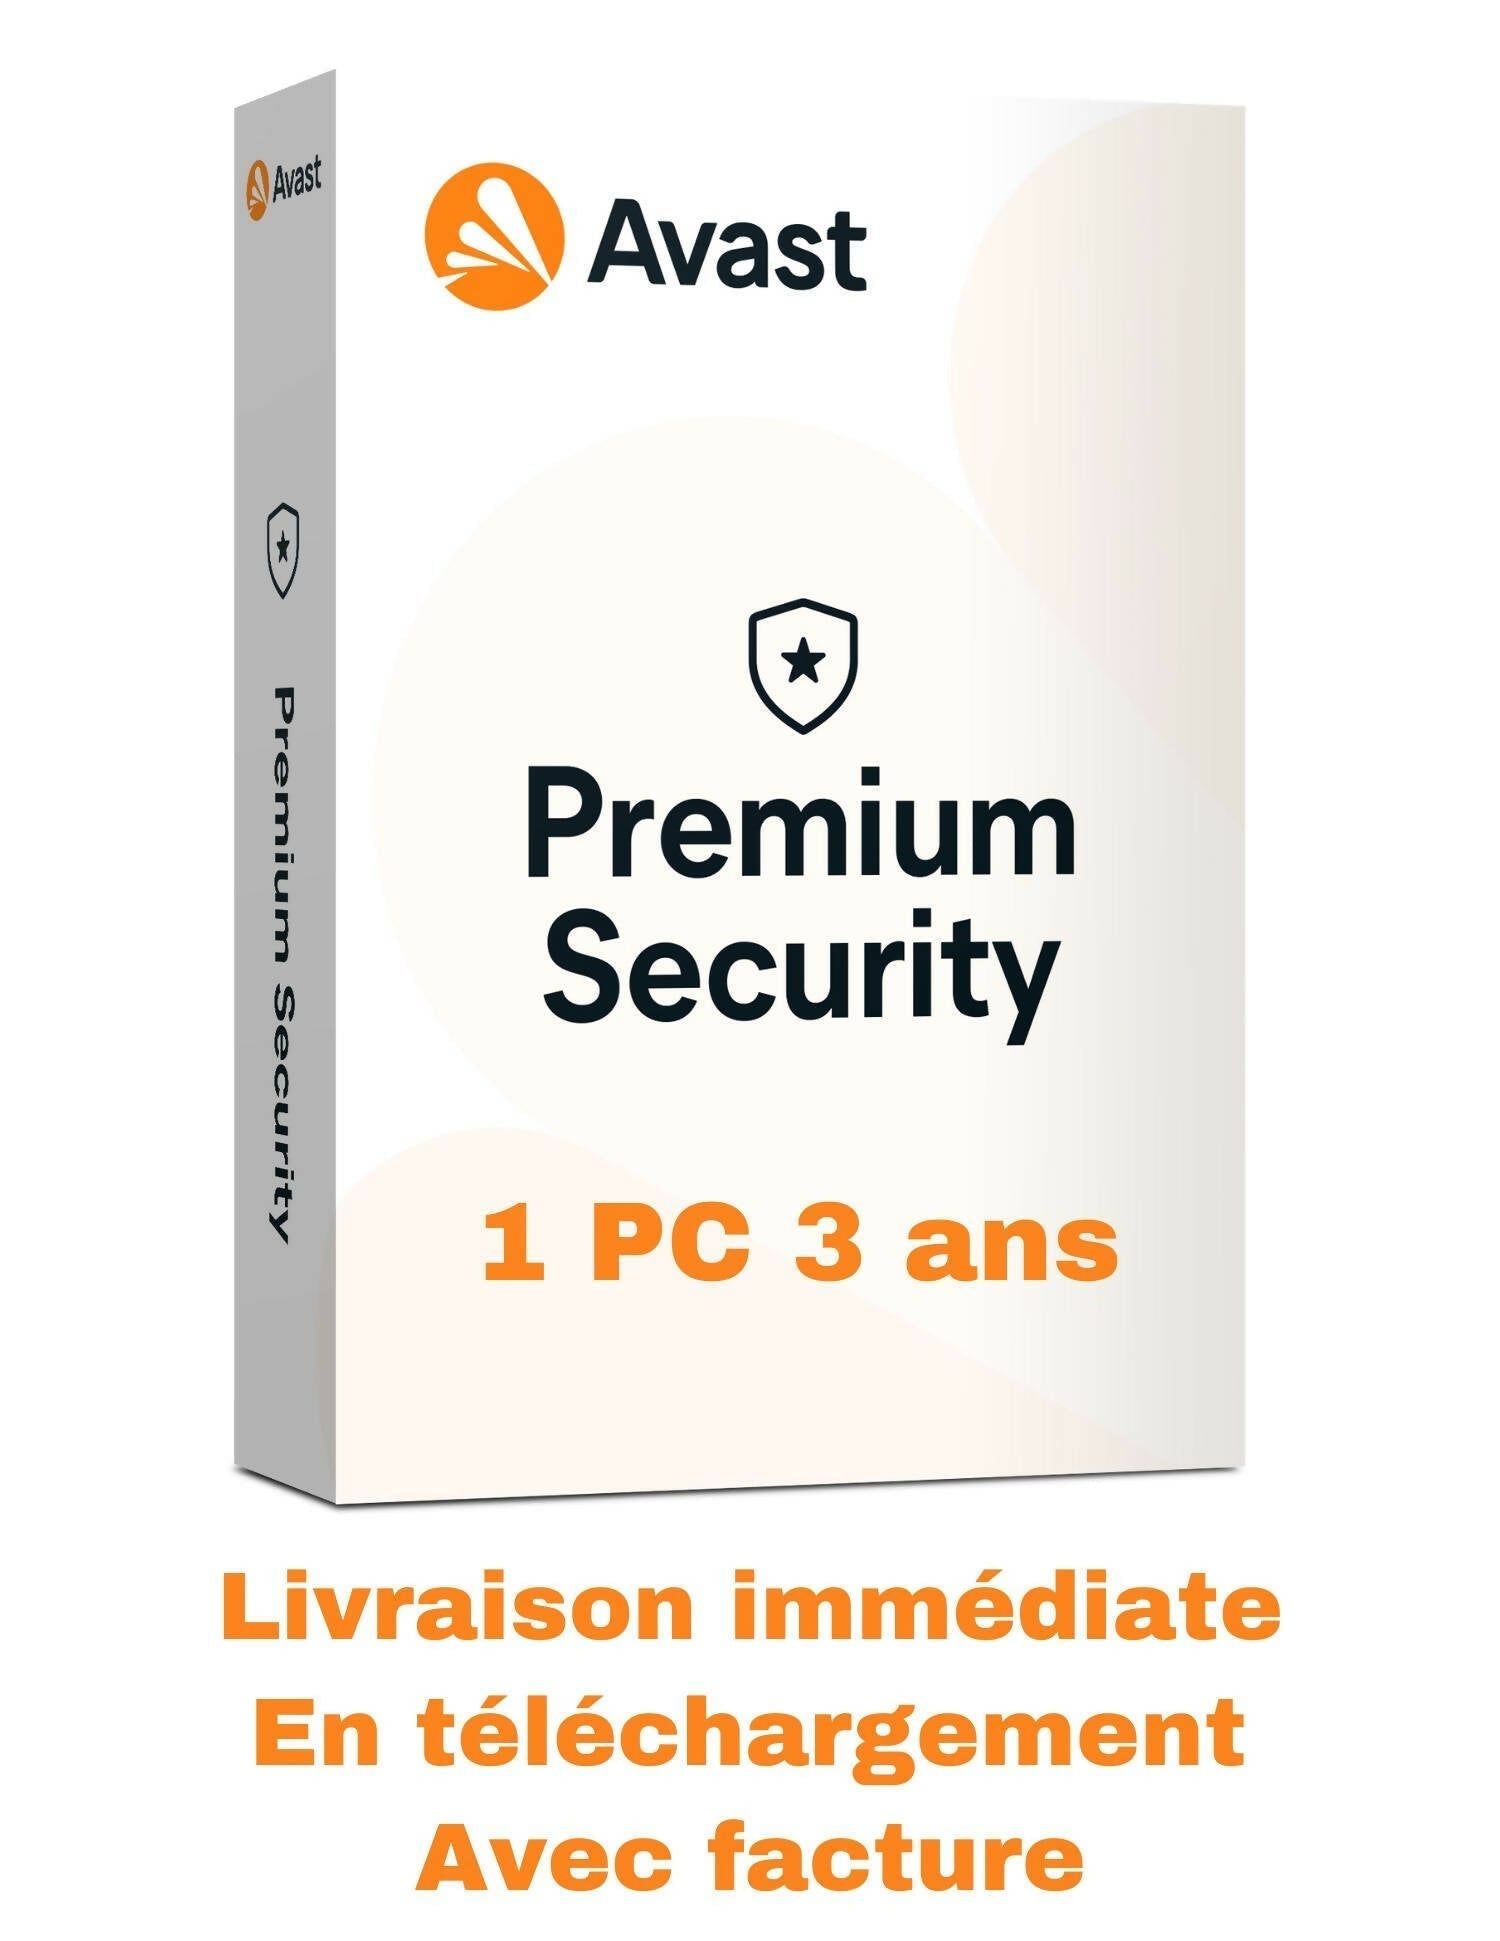 Avast Premium Security 1 PC 3 ans clicktofournisseur.com